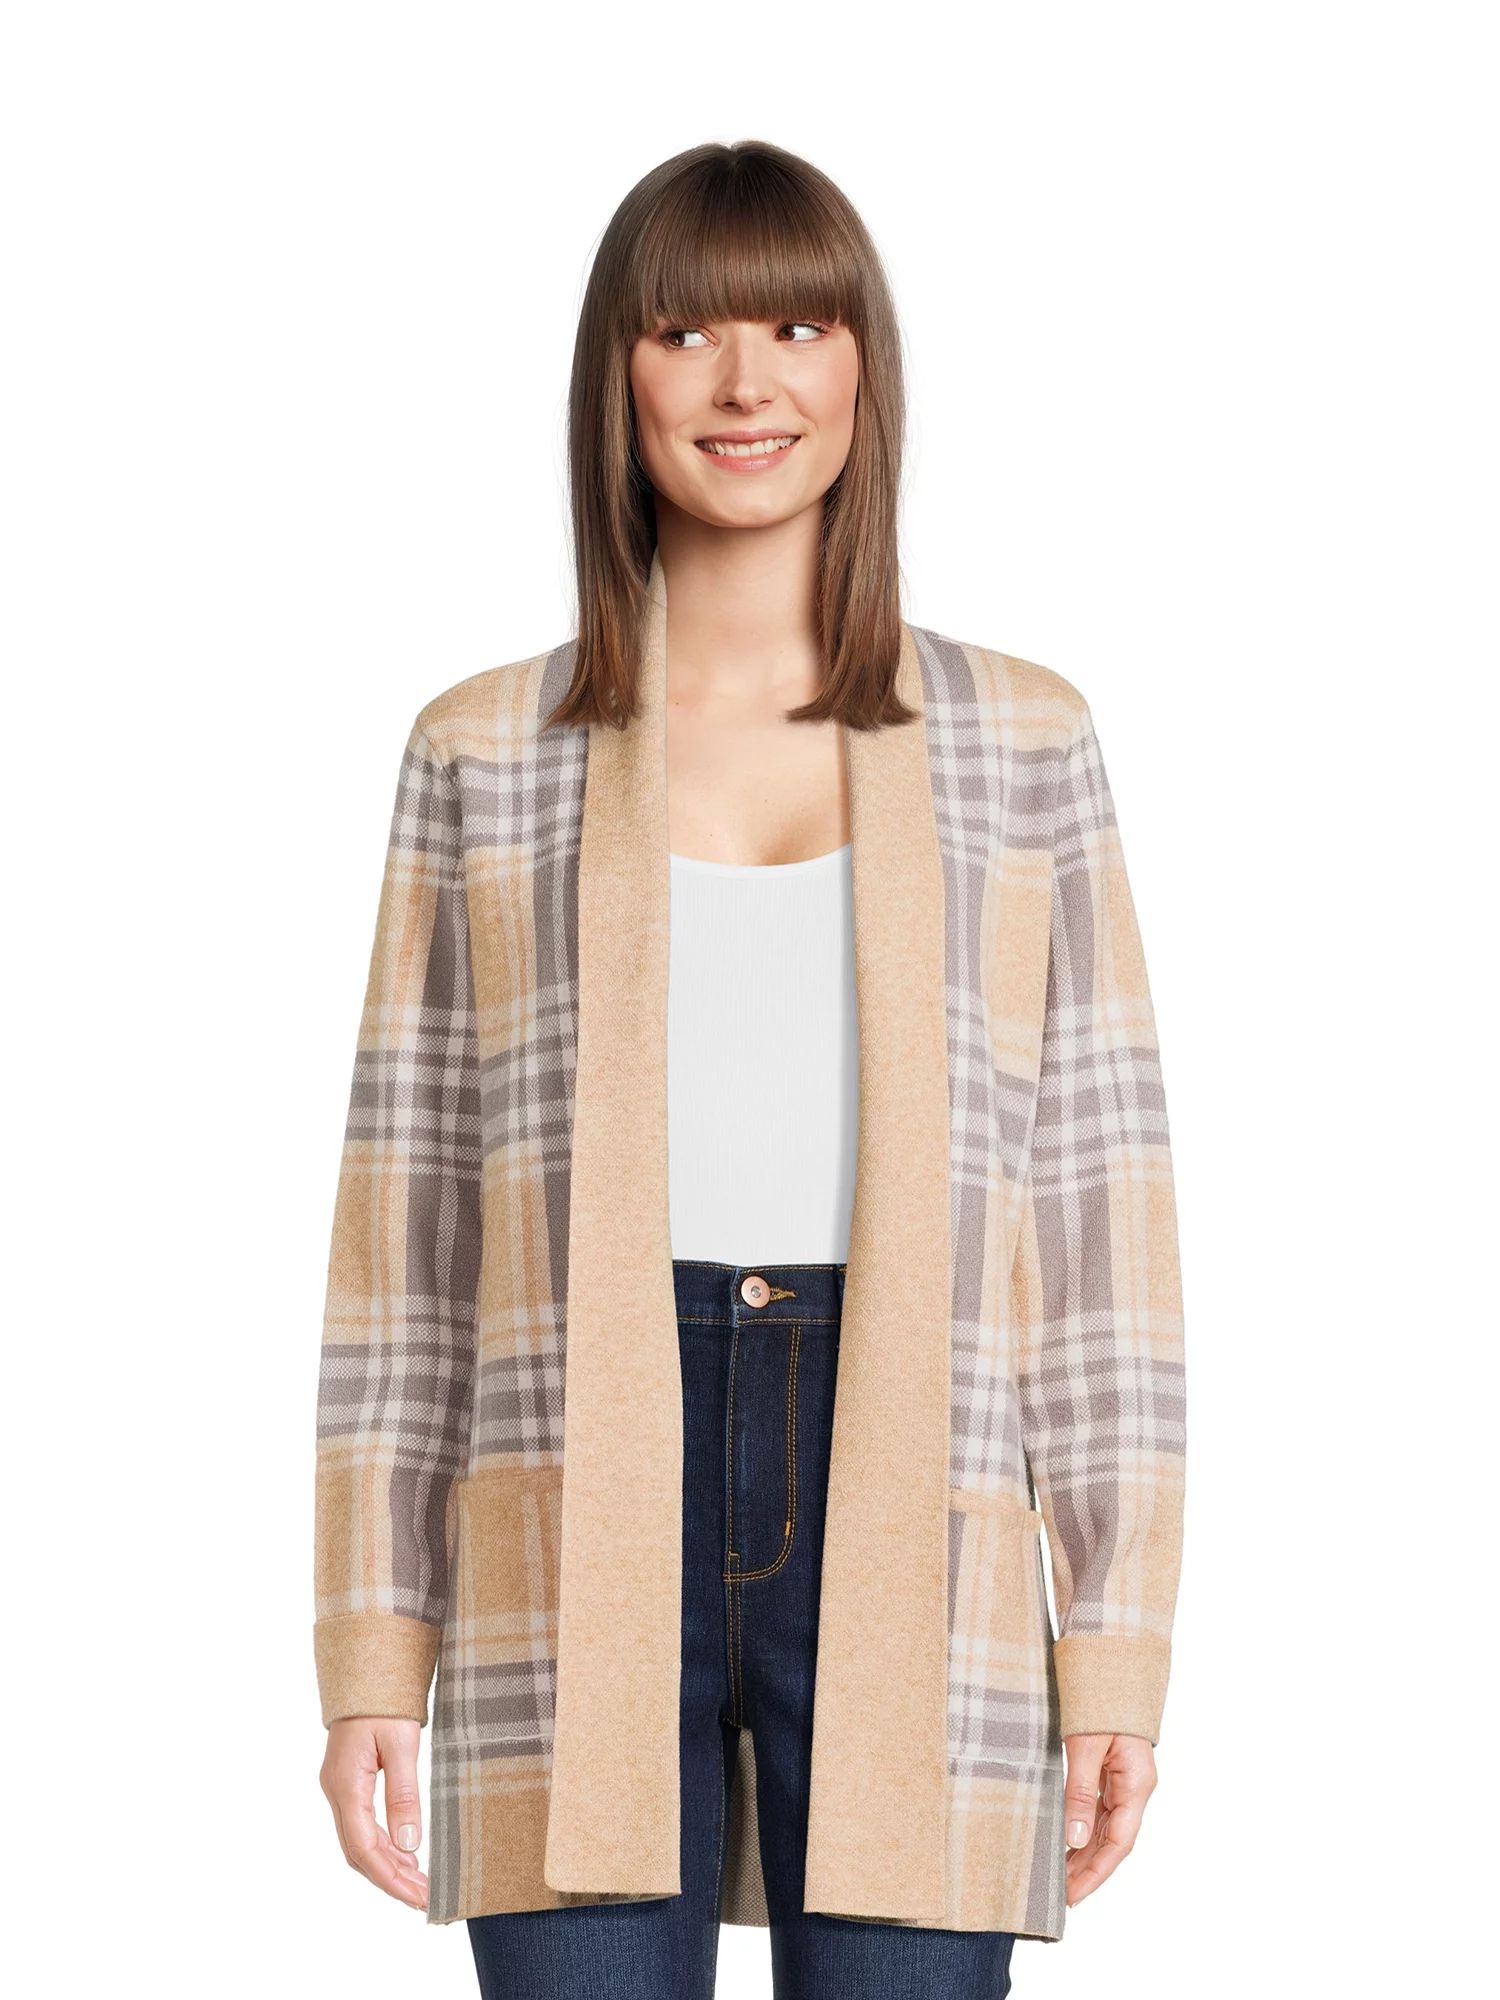 99 Jane Street Women's Open Front Cardigan Sweater with Long Sleeves, Midweight, Sizes XS-XXXL | Walmart (US)